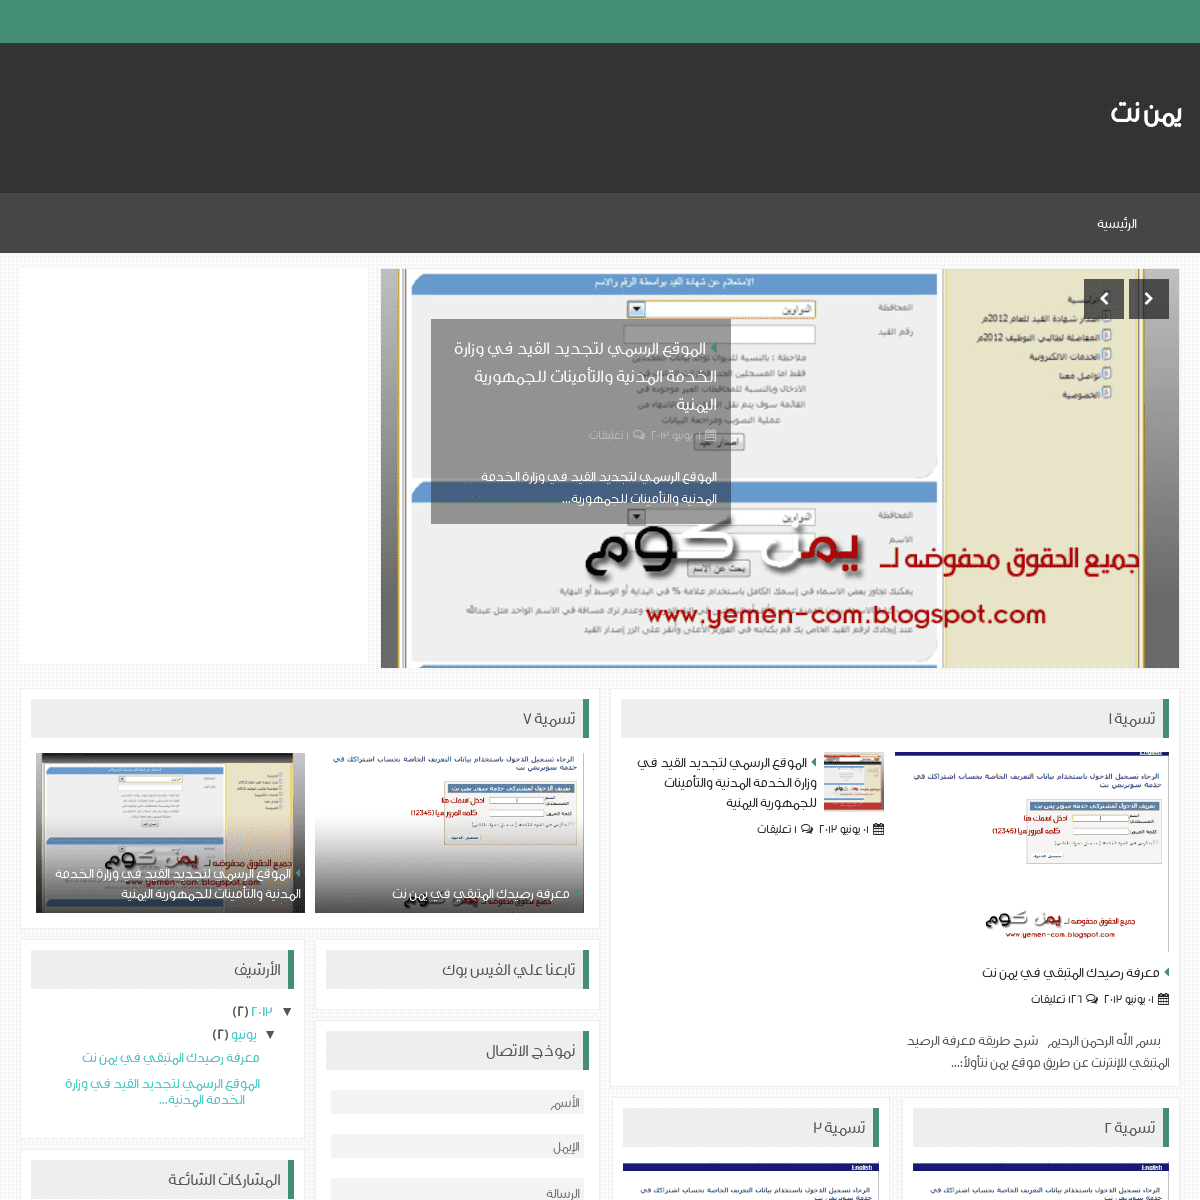 A complete backup of yemen-net.blogspot.com